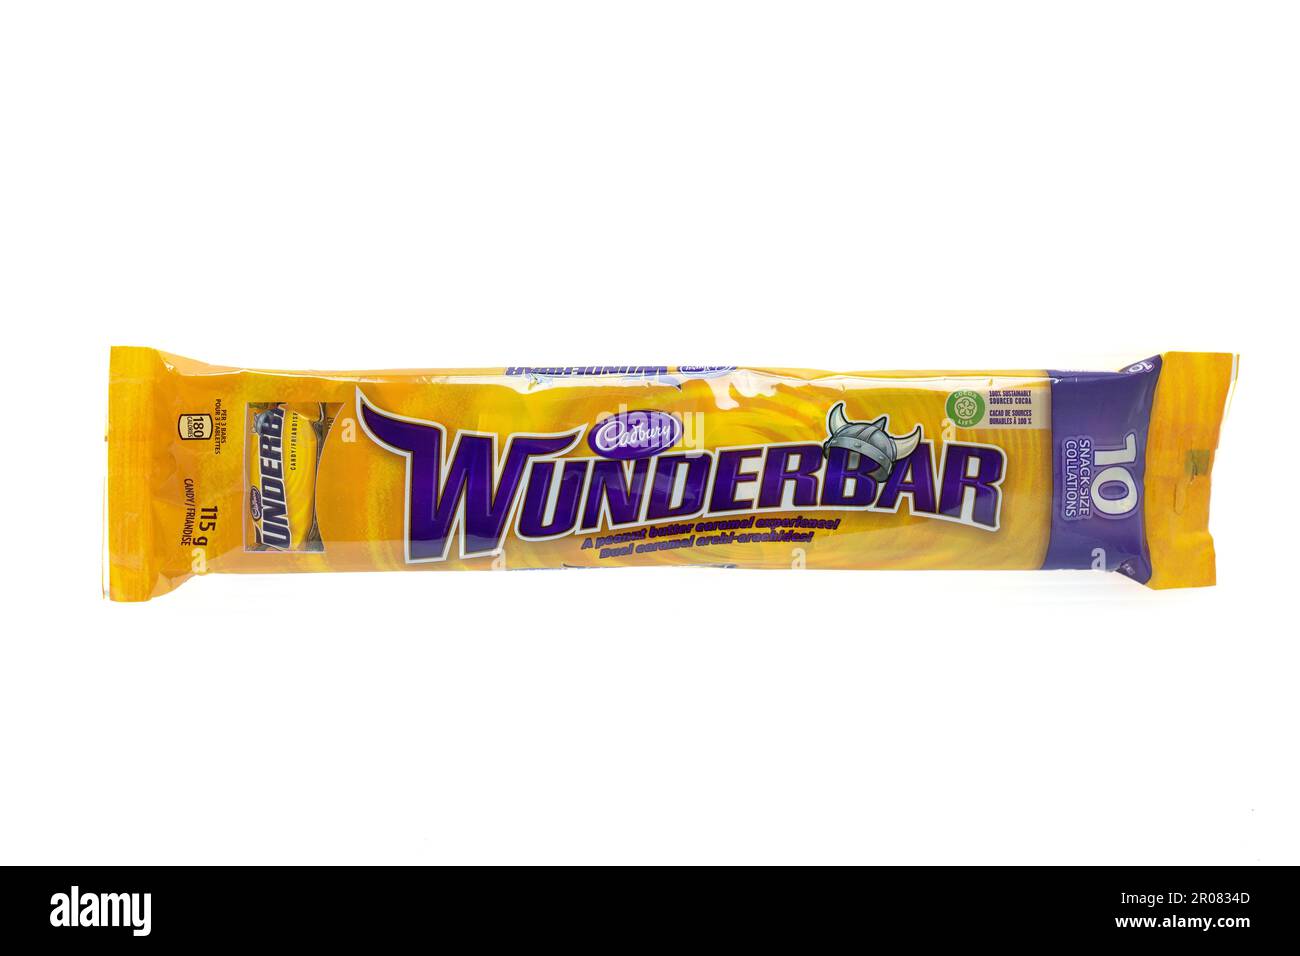 Canadian Cadbury, Cadbury Wunderbar, Snack Pack 10 Bars, Supermarket Packaging  Peanut Butter Chocolate Bar Candy Stock Photo